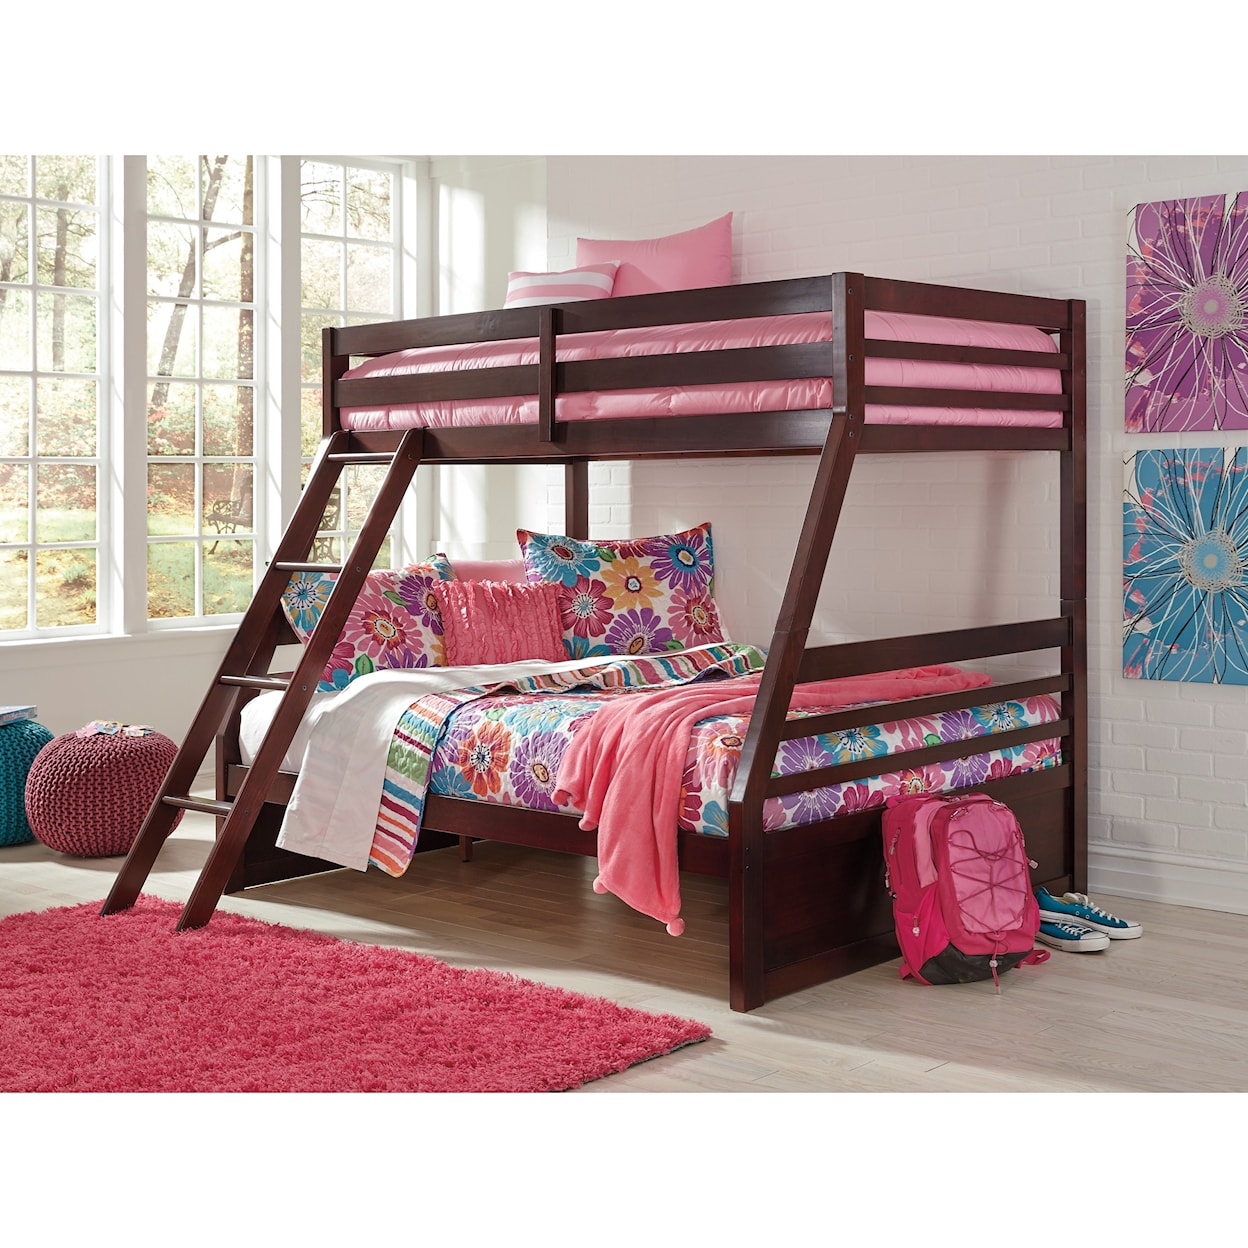 Ashley Furniture Signature Design Halanton Twin/Full Bunk Bed